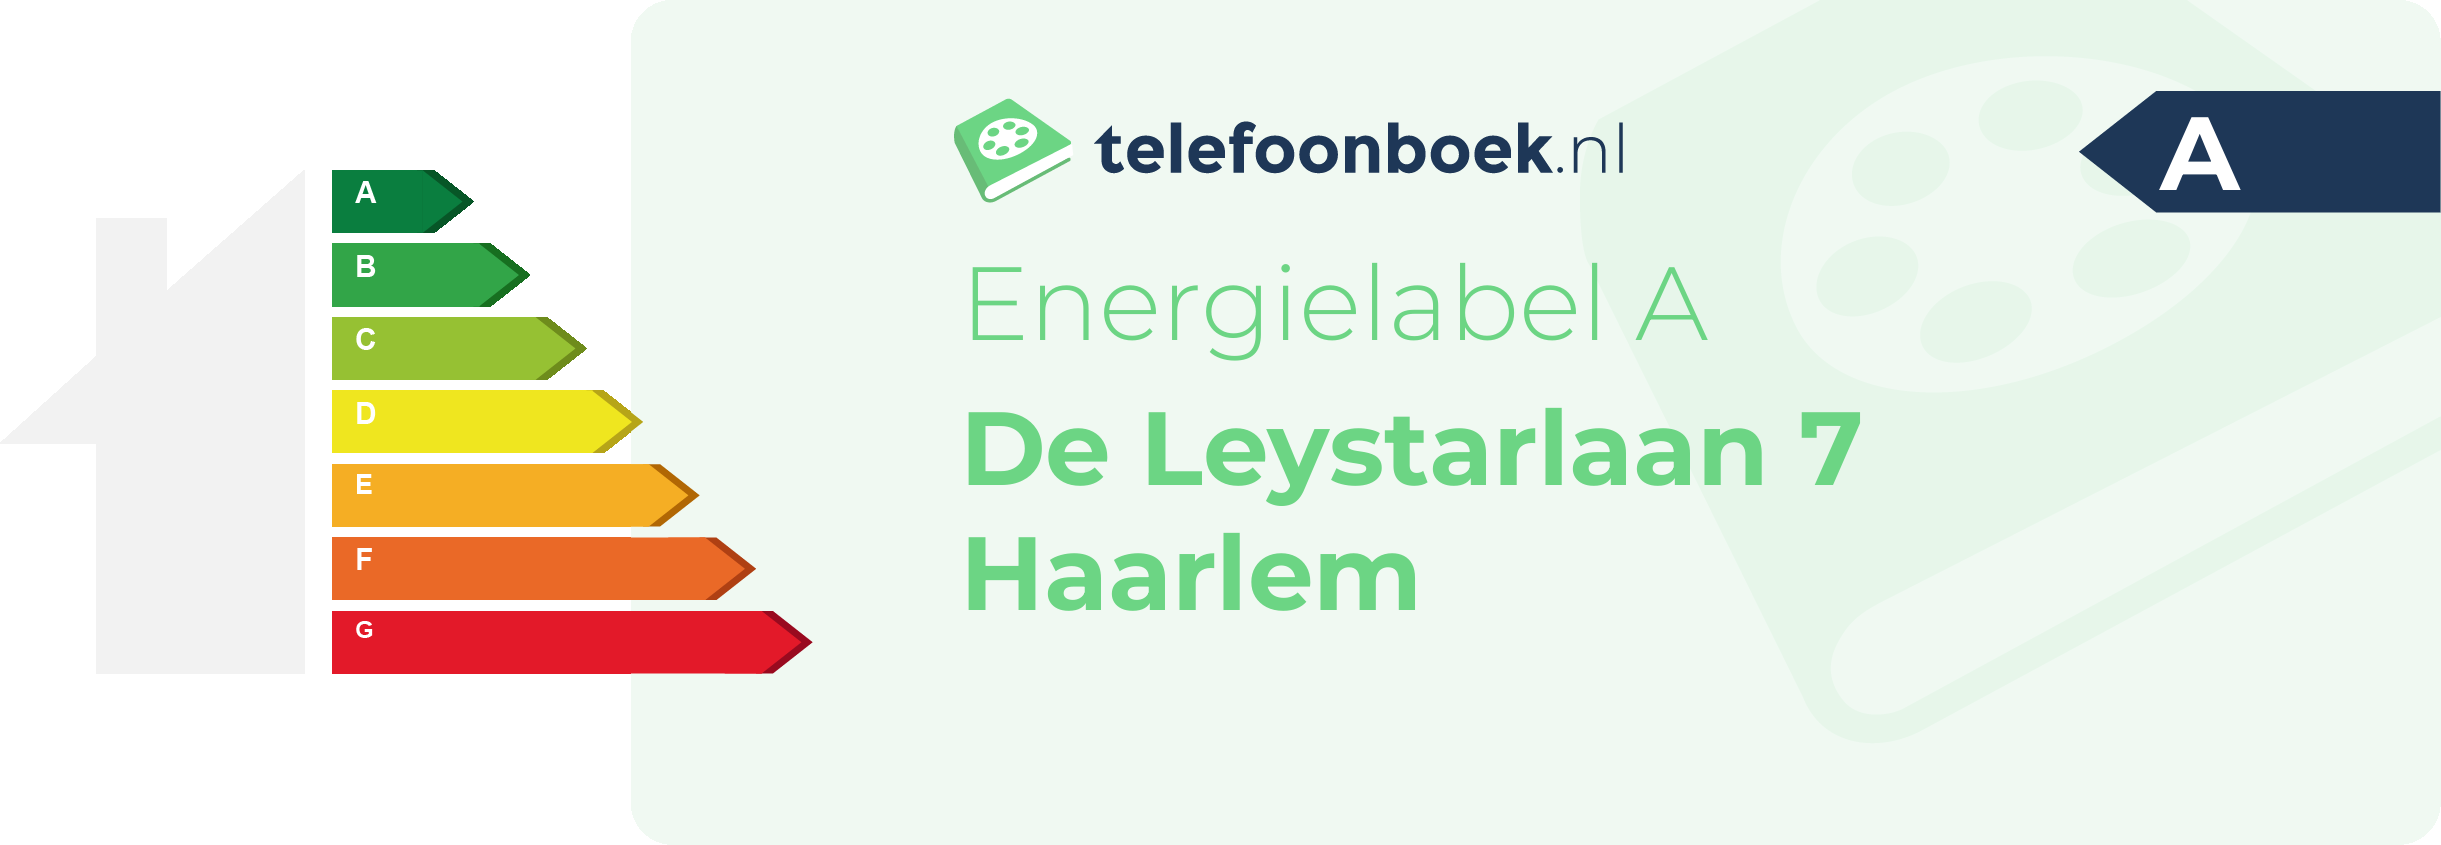 Energielabel De Leystarlaan 7 Haarlem